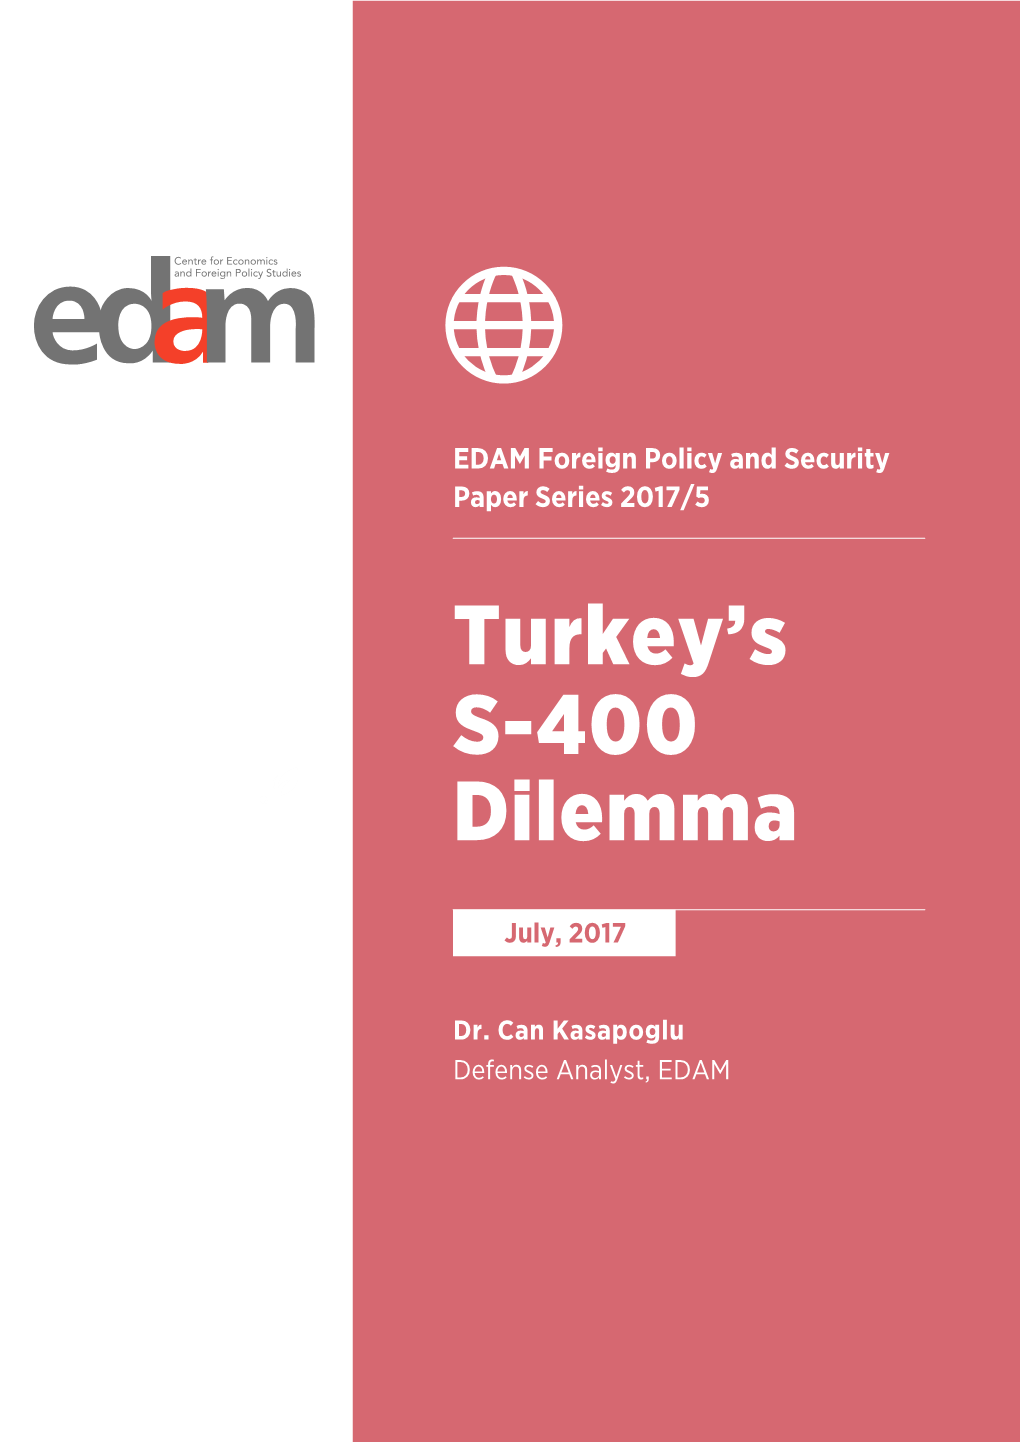 Turkey's S-400 Dilemma